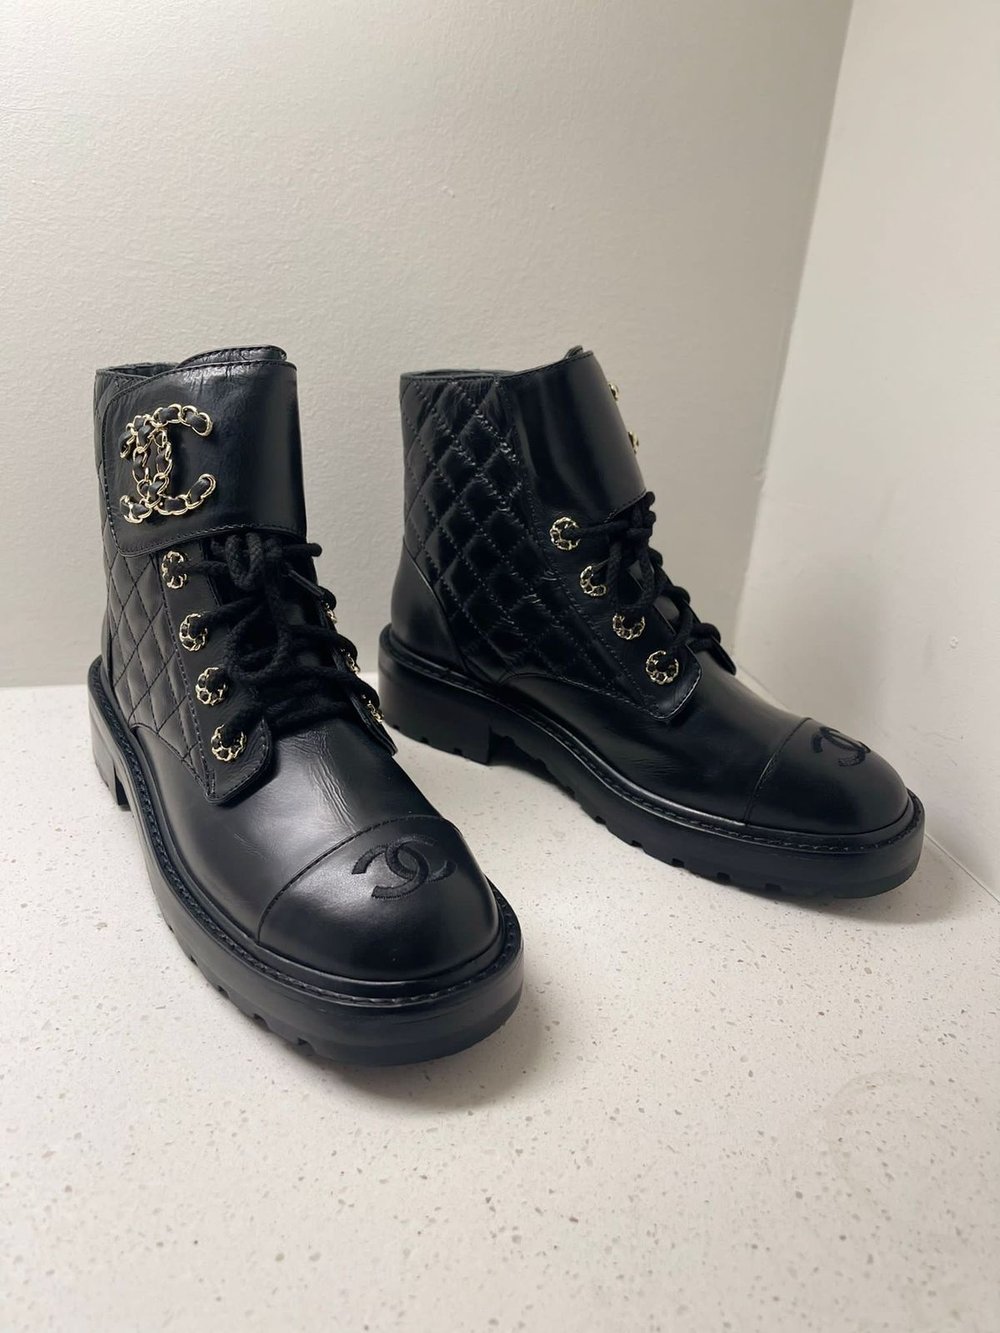 CC boots